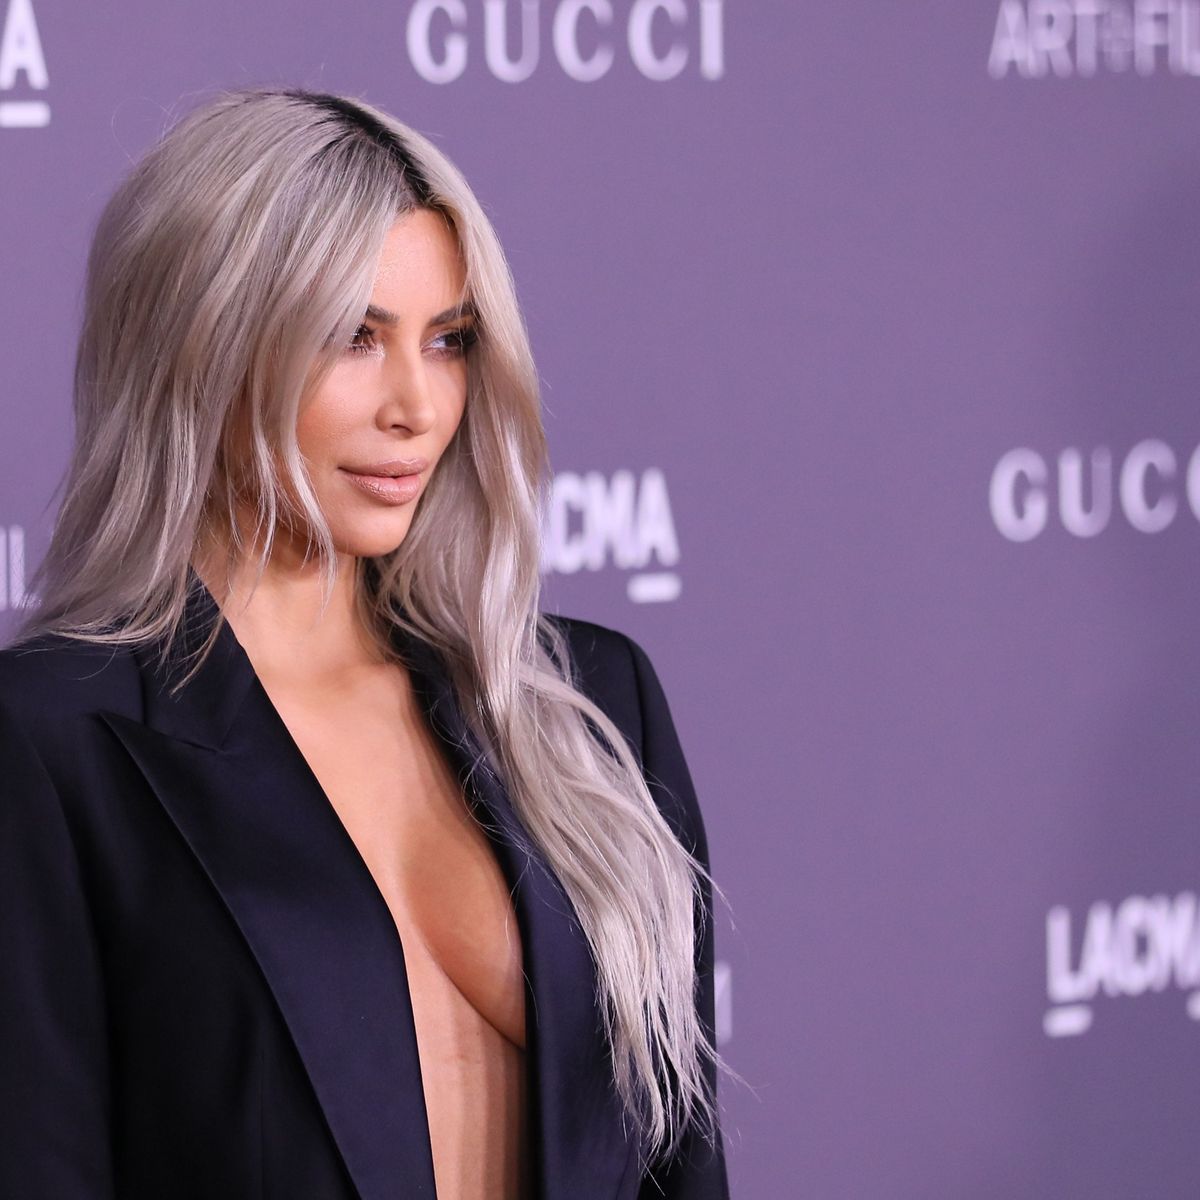 Kim Kardashian Wears Skin-Tight Bodysuit After Revealing 21 Pound